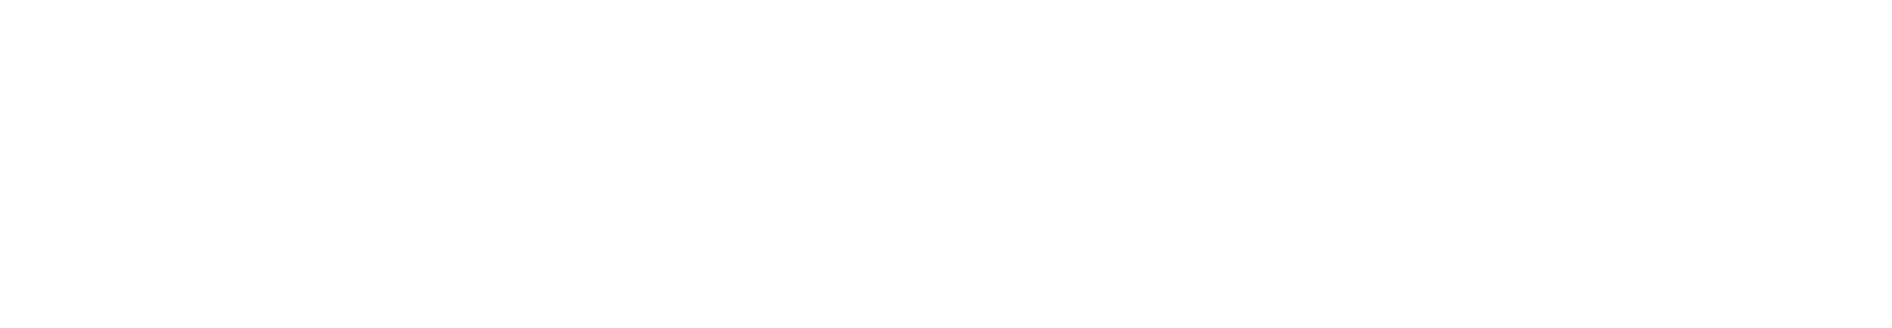 Morris & Hislope Funeral Home Logo